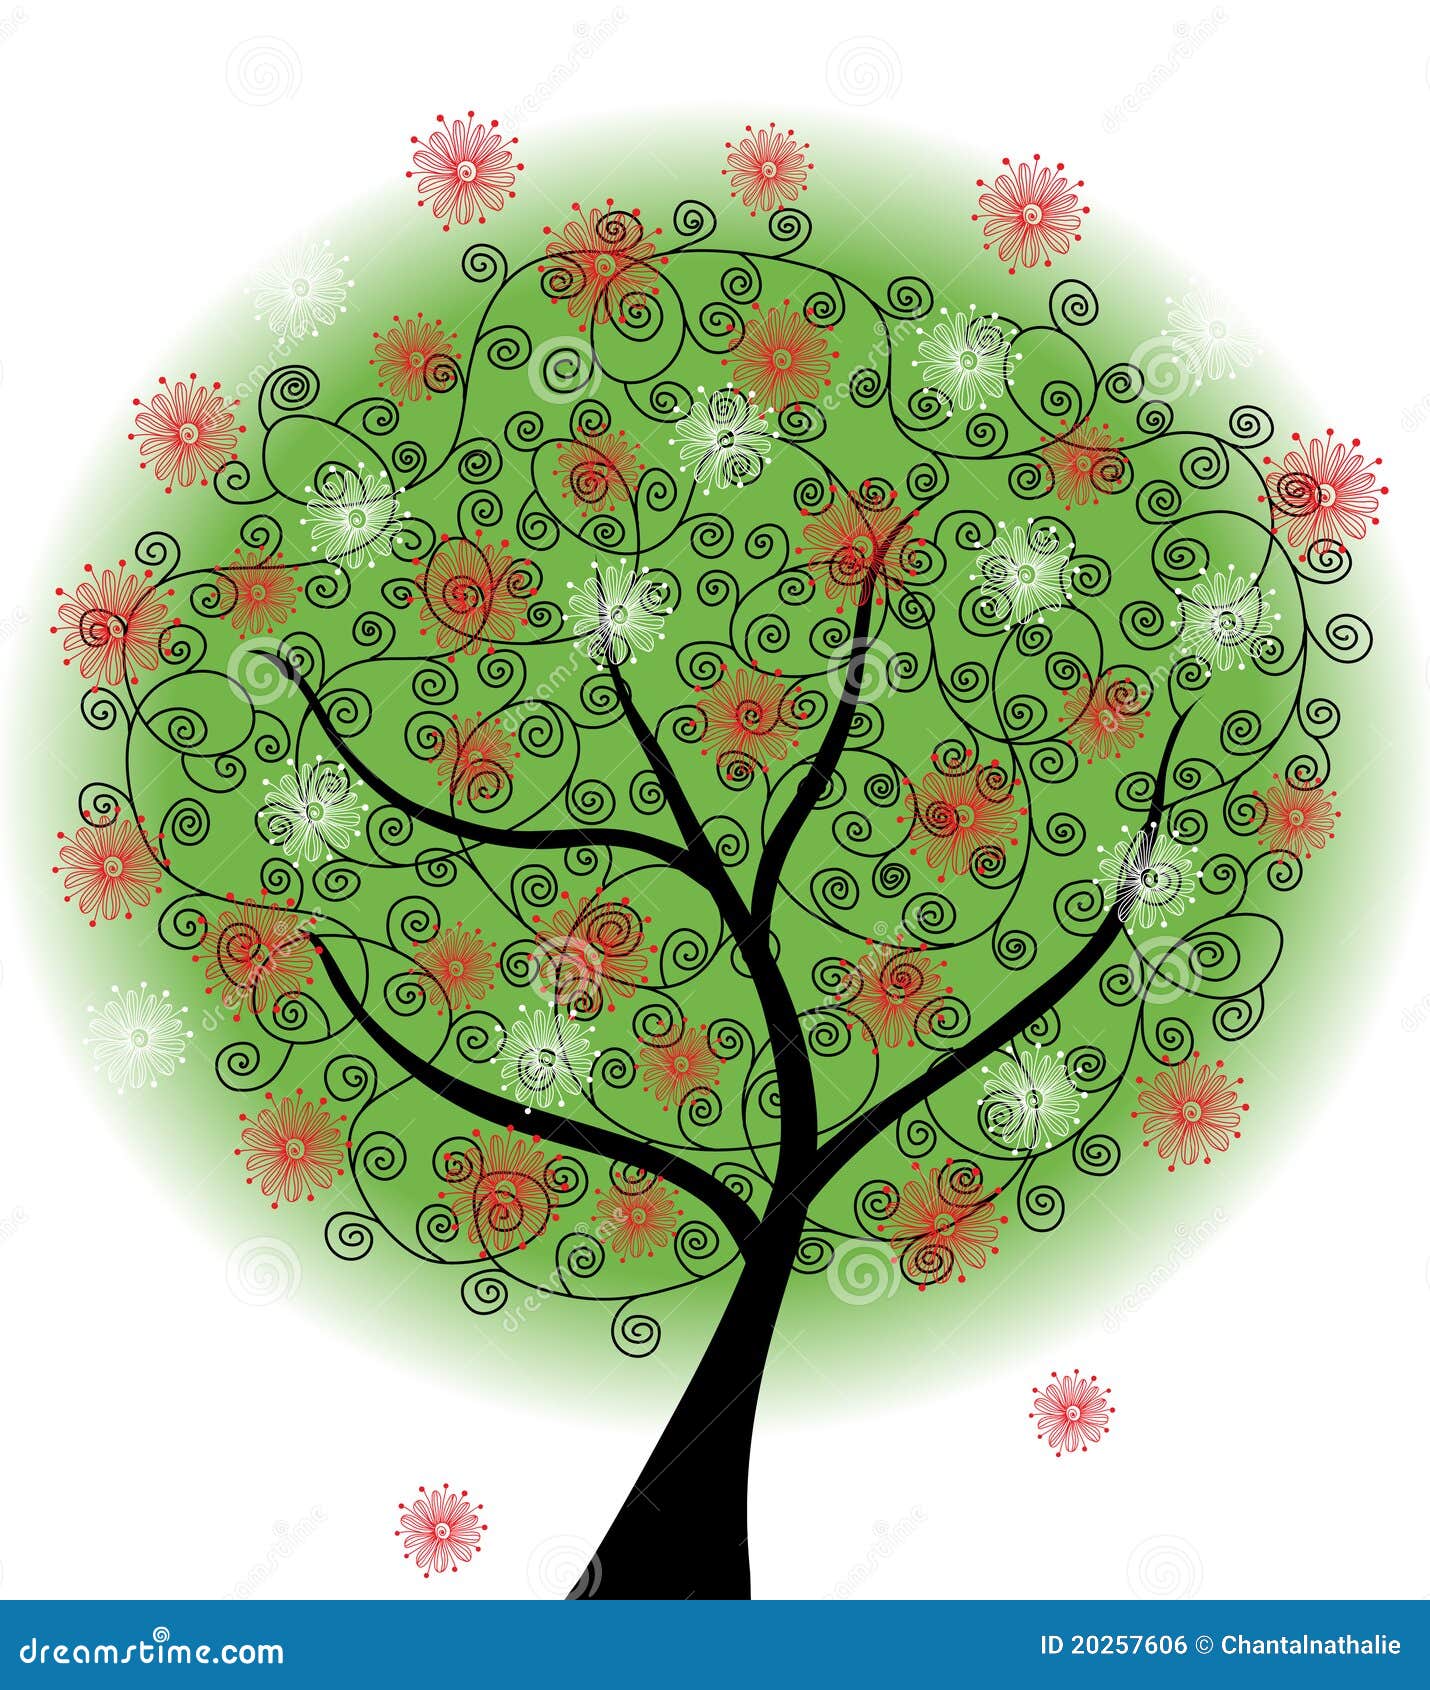 Яблоня дерево символ. Дерево символ семьи. Дерево символ семейного благополучия. Дерево символизирующее летний. Дерево лето вектор.